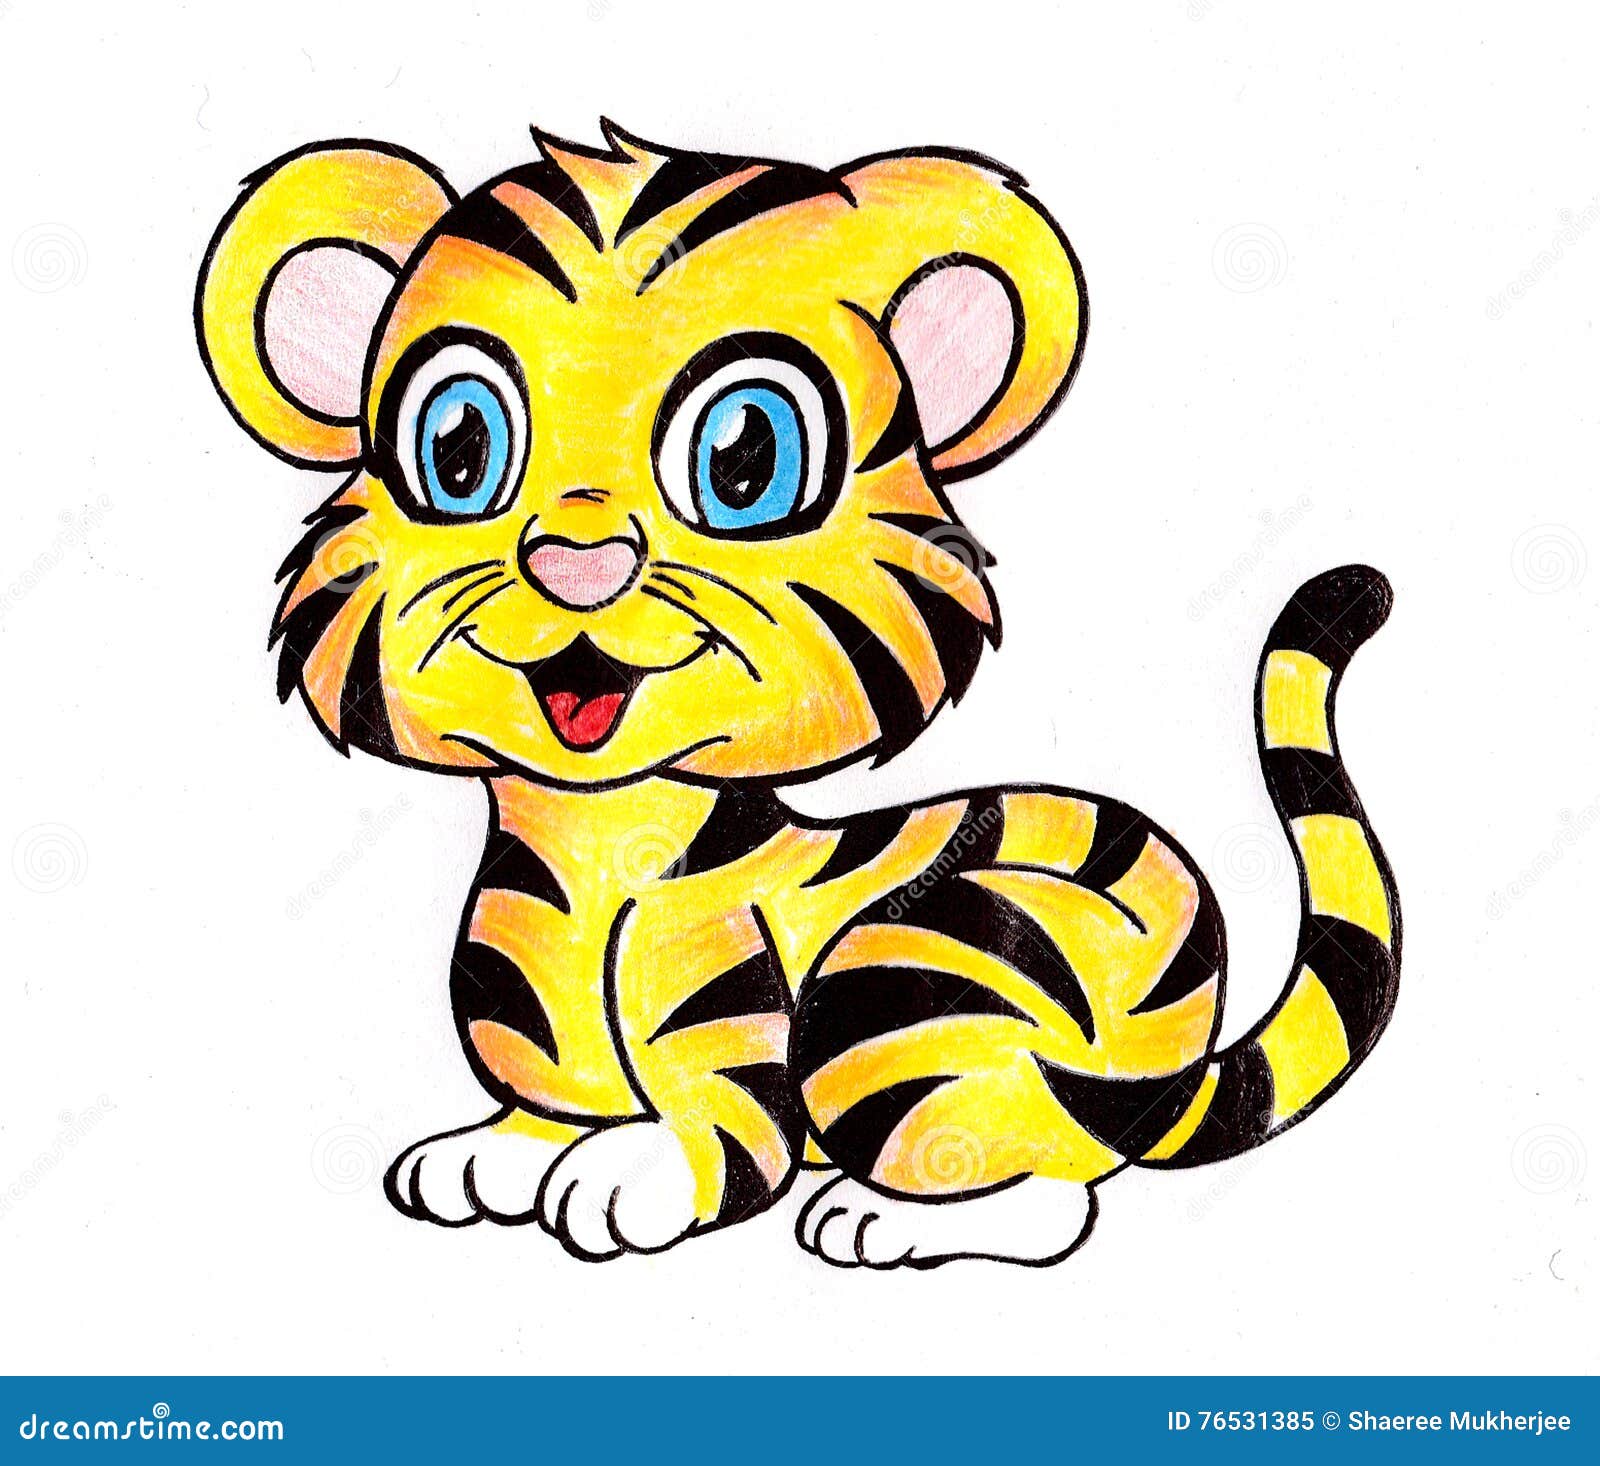 1,200+ Royal Bengal Tiger Drawings Stock Illustrations, Royalty-Free Vector  Graphics & Clip Art - iStock